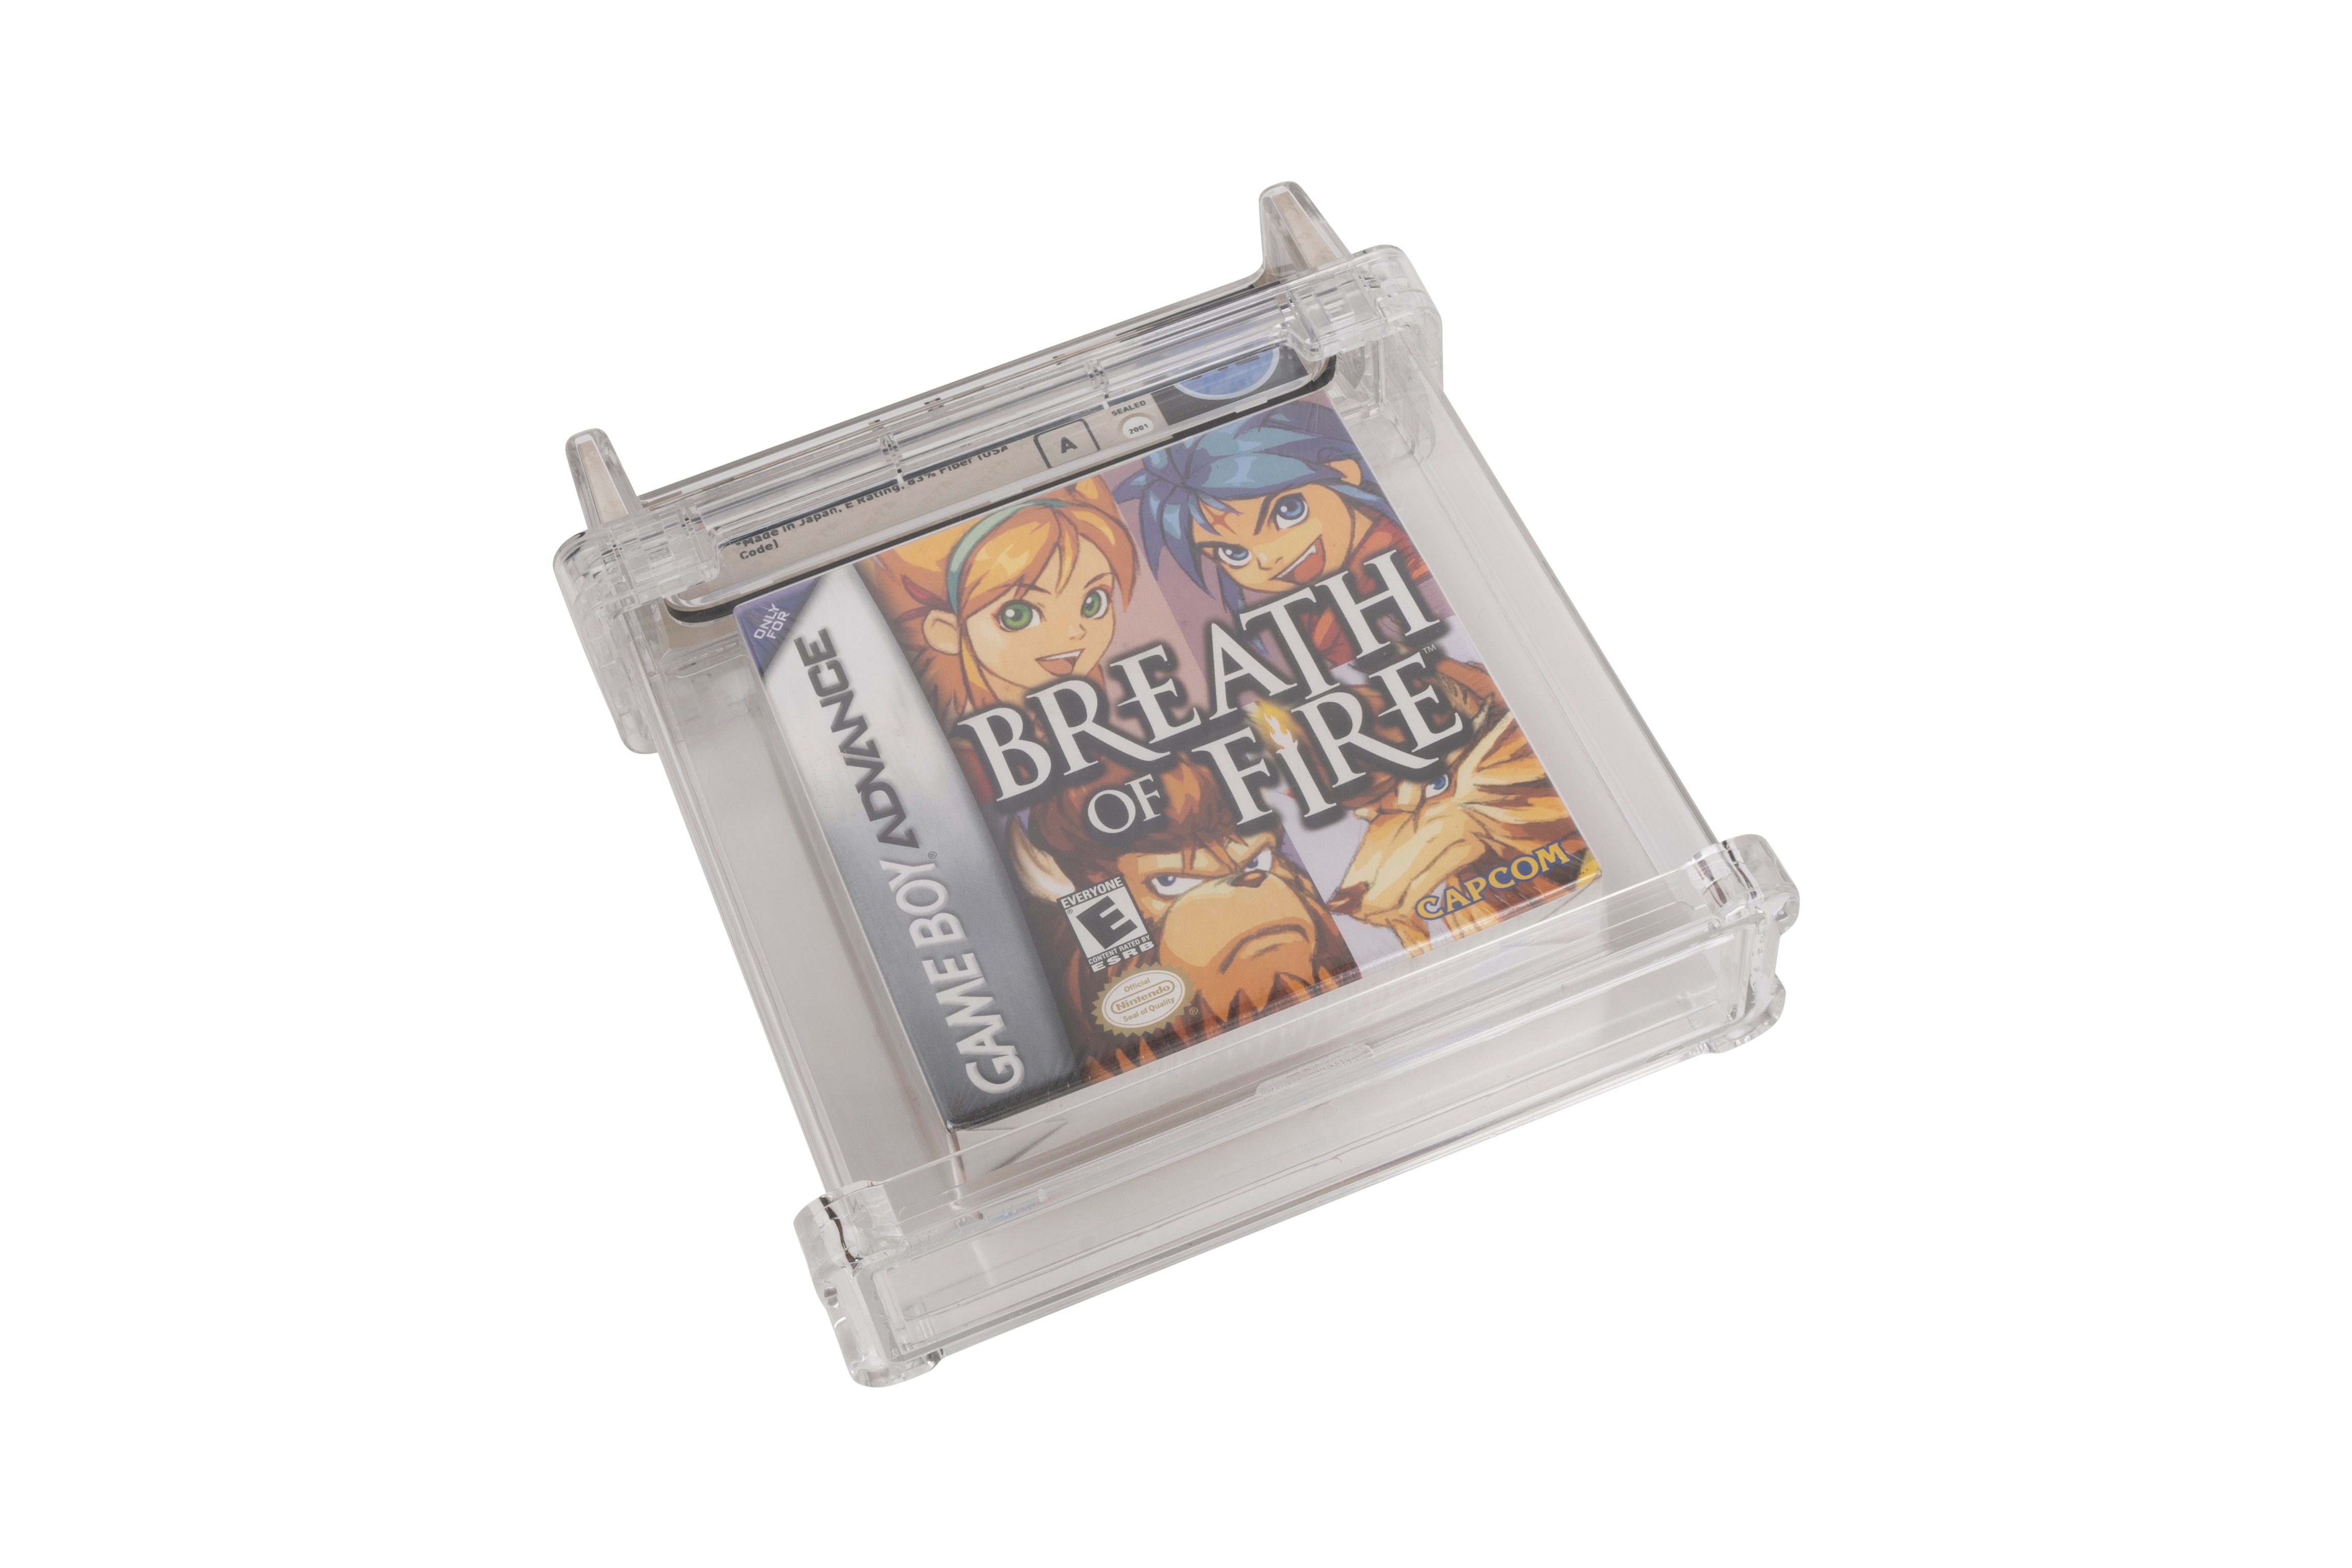 Nintendo - WATA 9.2A Breath of Fire - Game Boy Advance